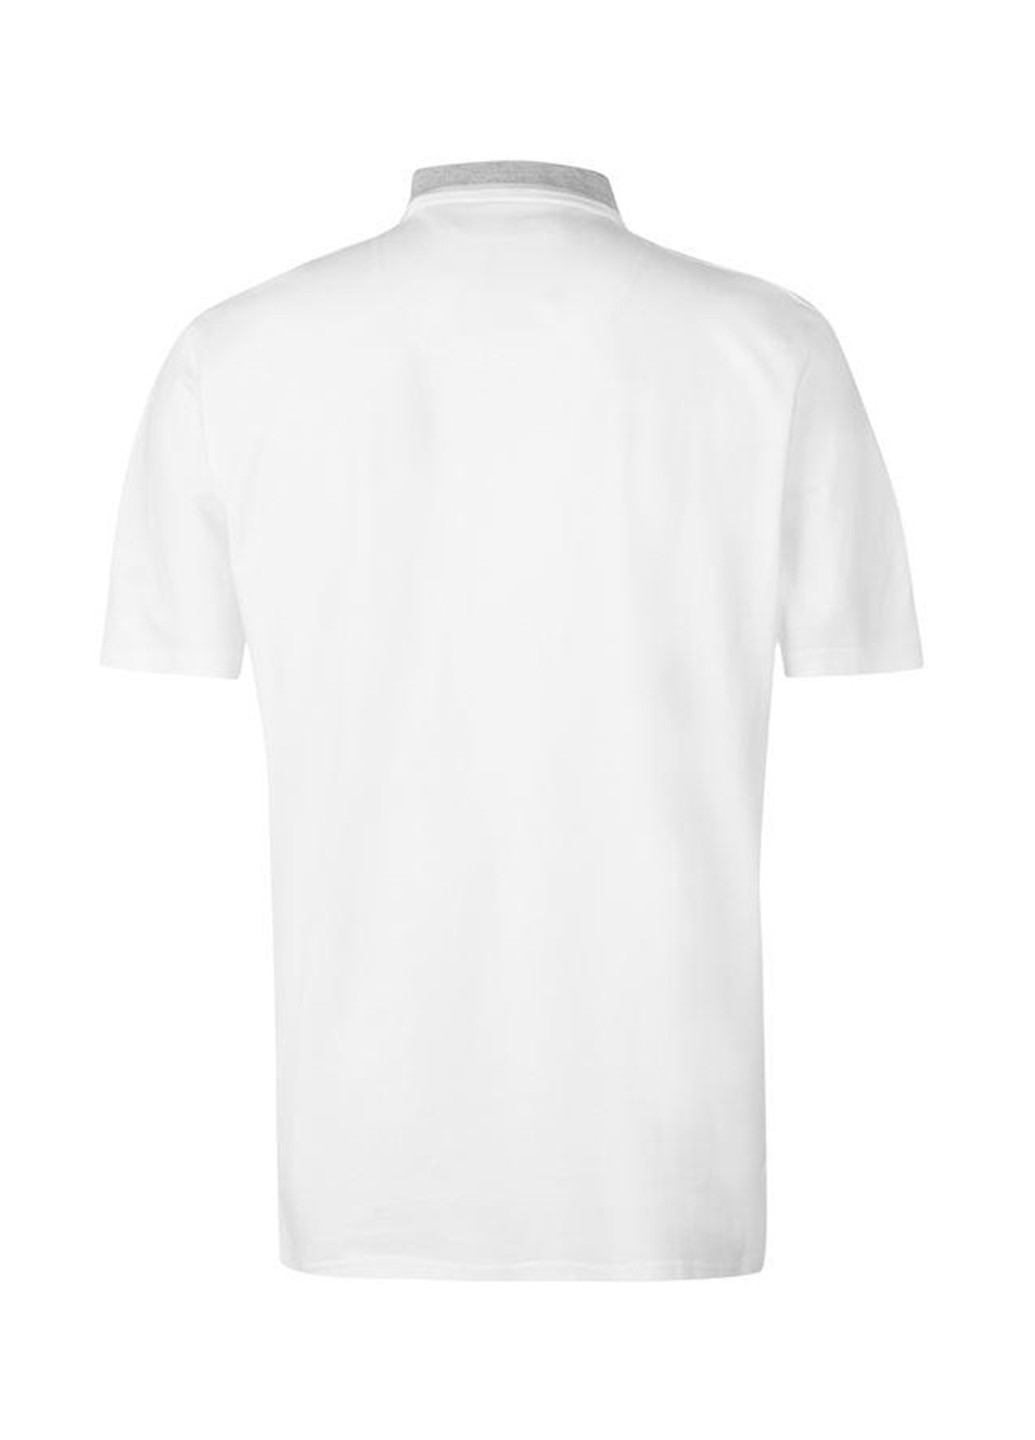 Белая футболка-поло для мужчин Soulcal & Co с логотипом